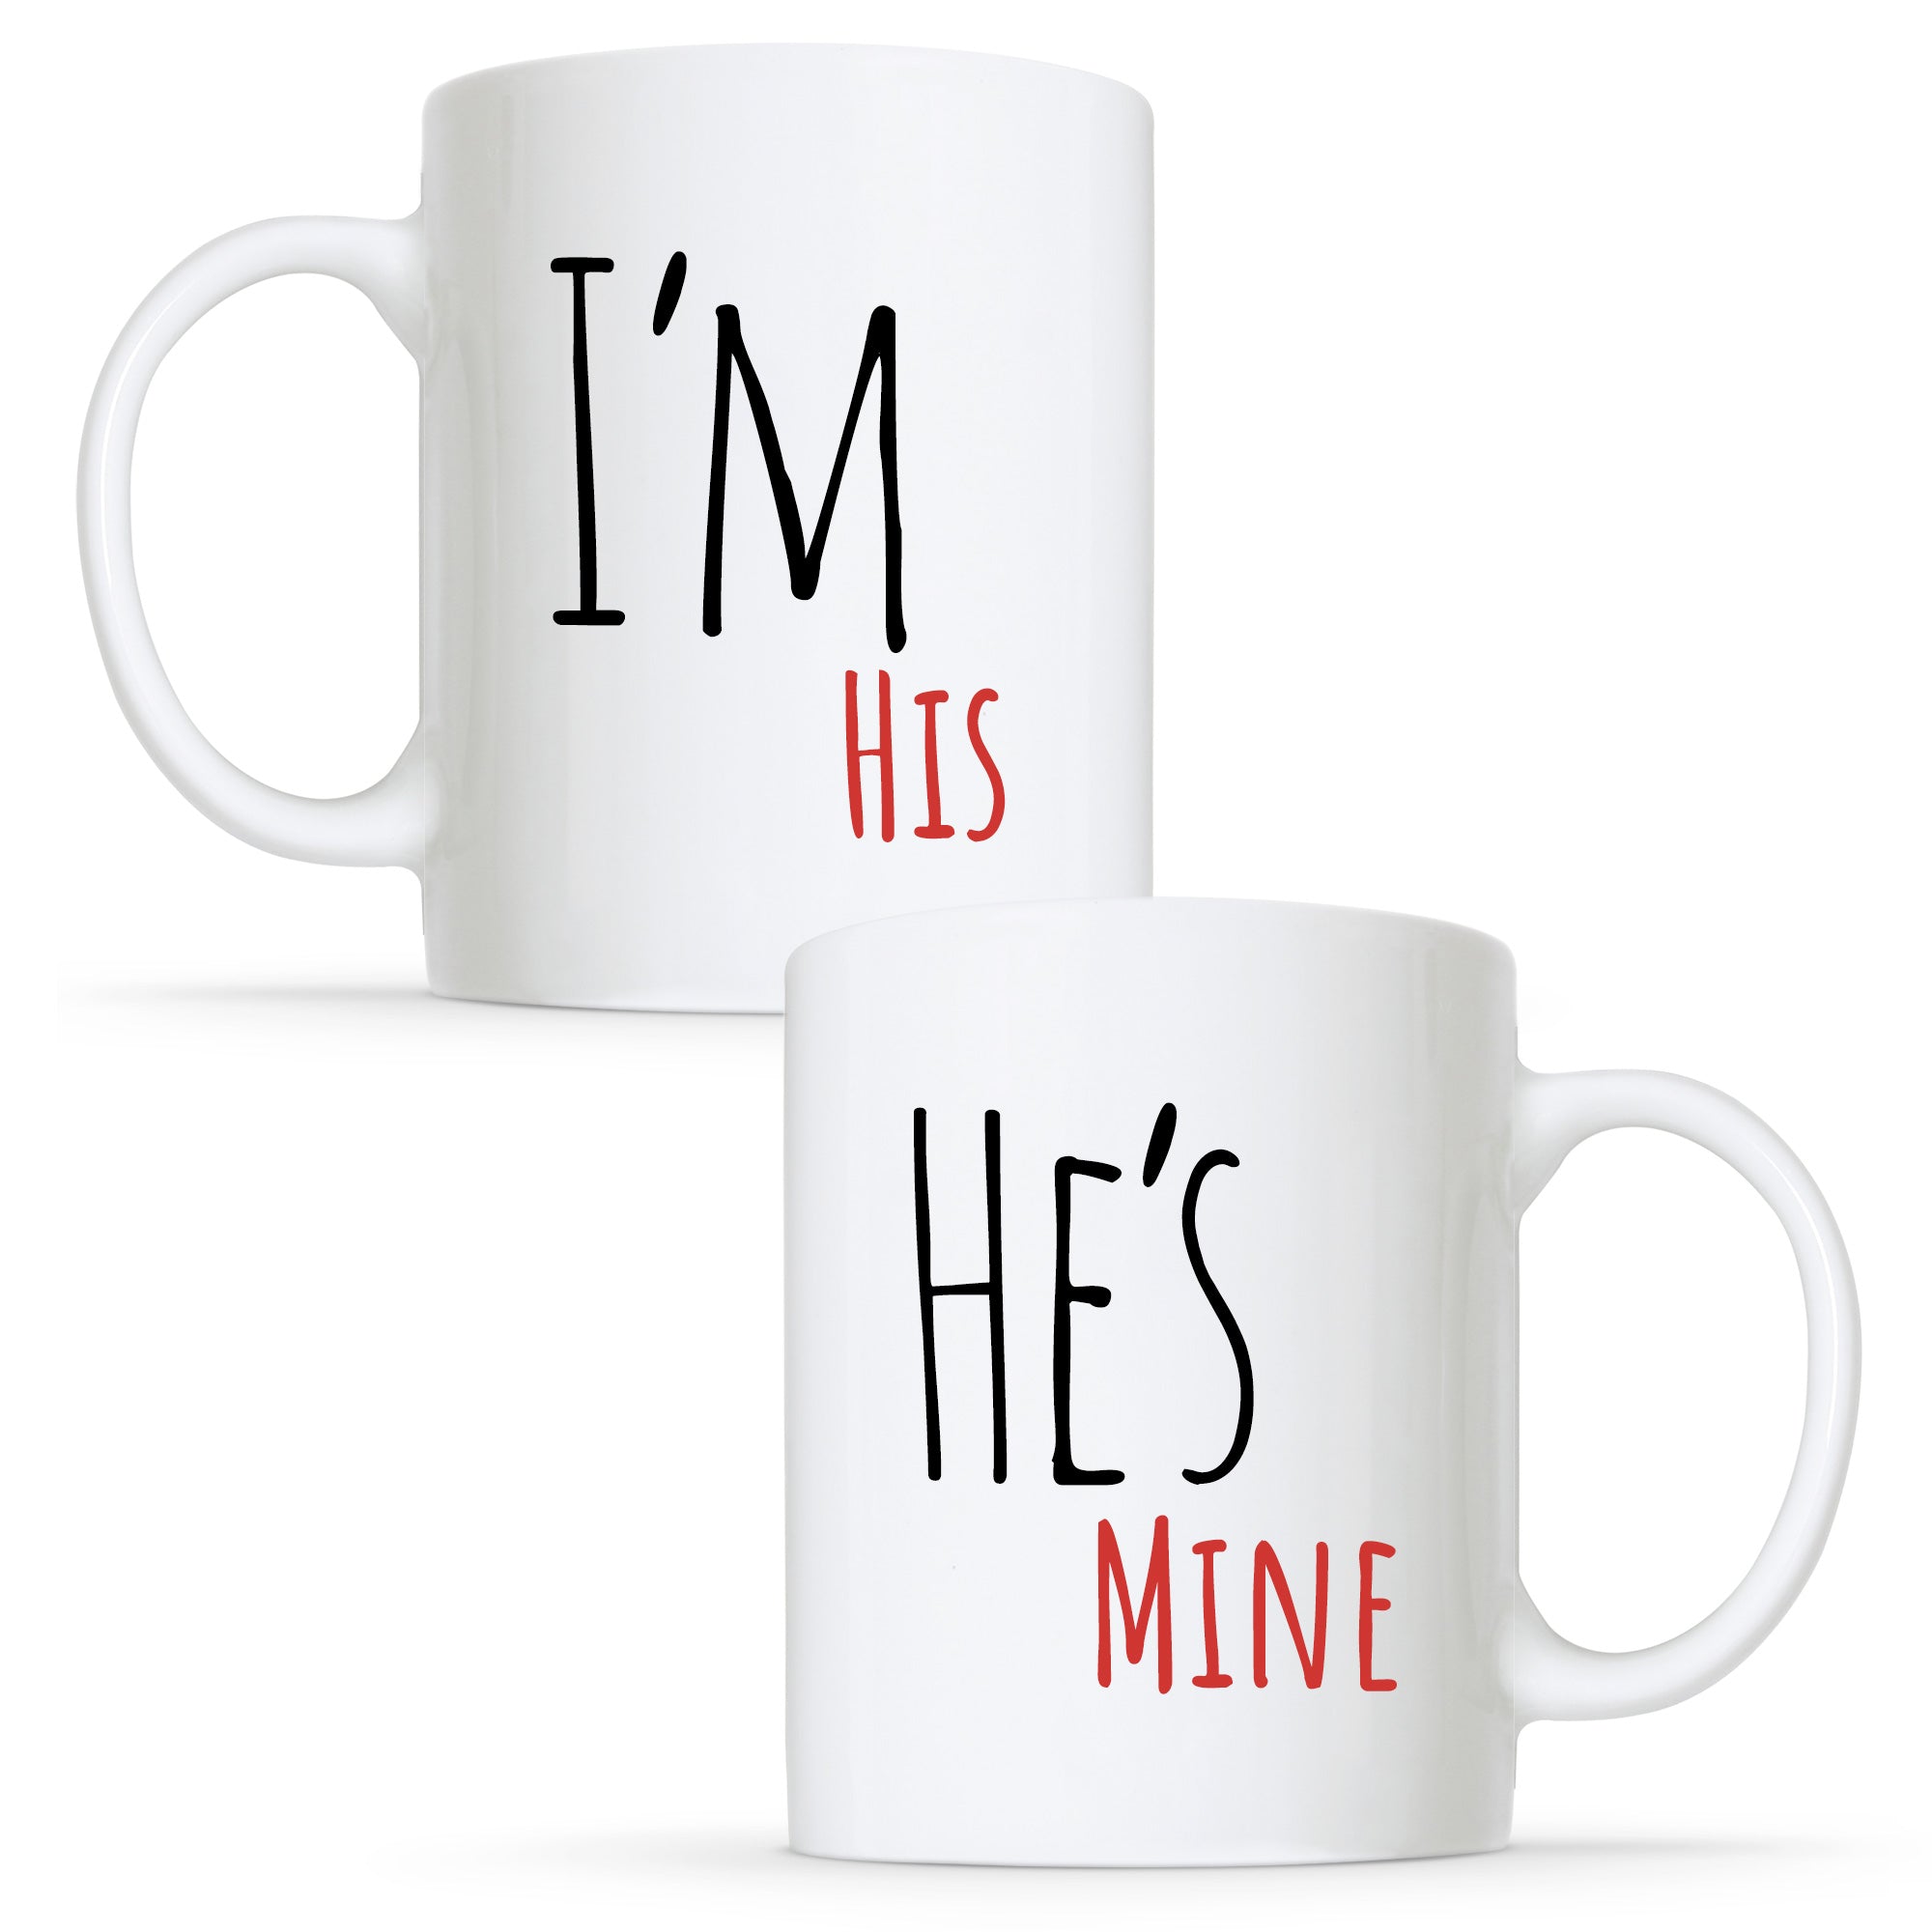 Personalised Wedding Mug Set, Printed Mug, Make custom mugs